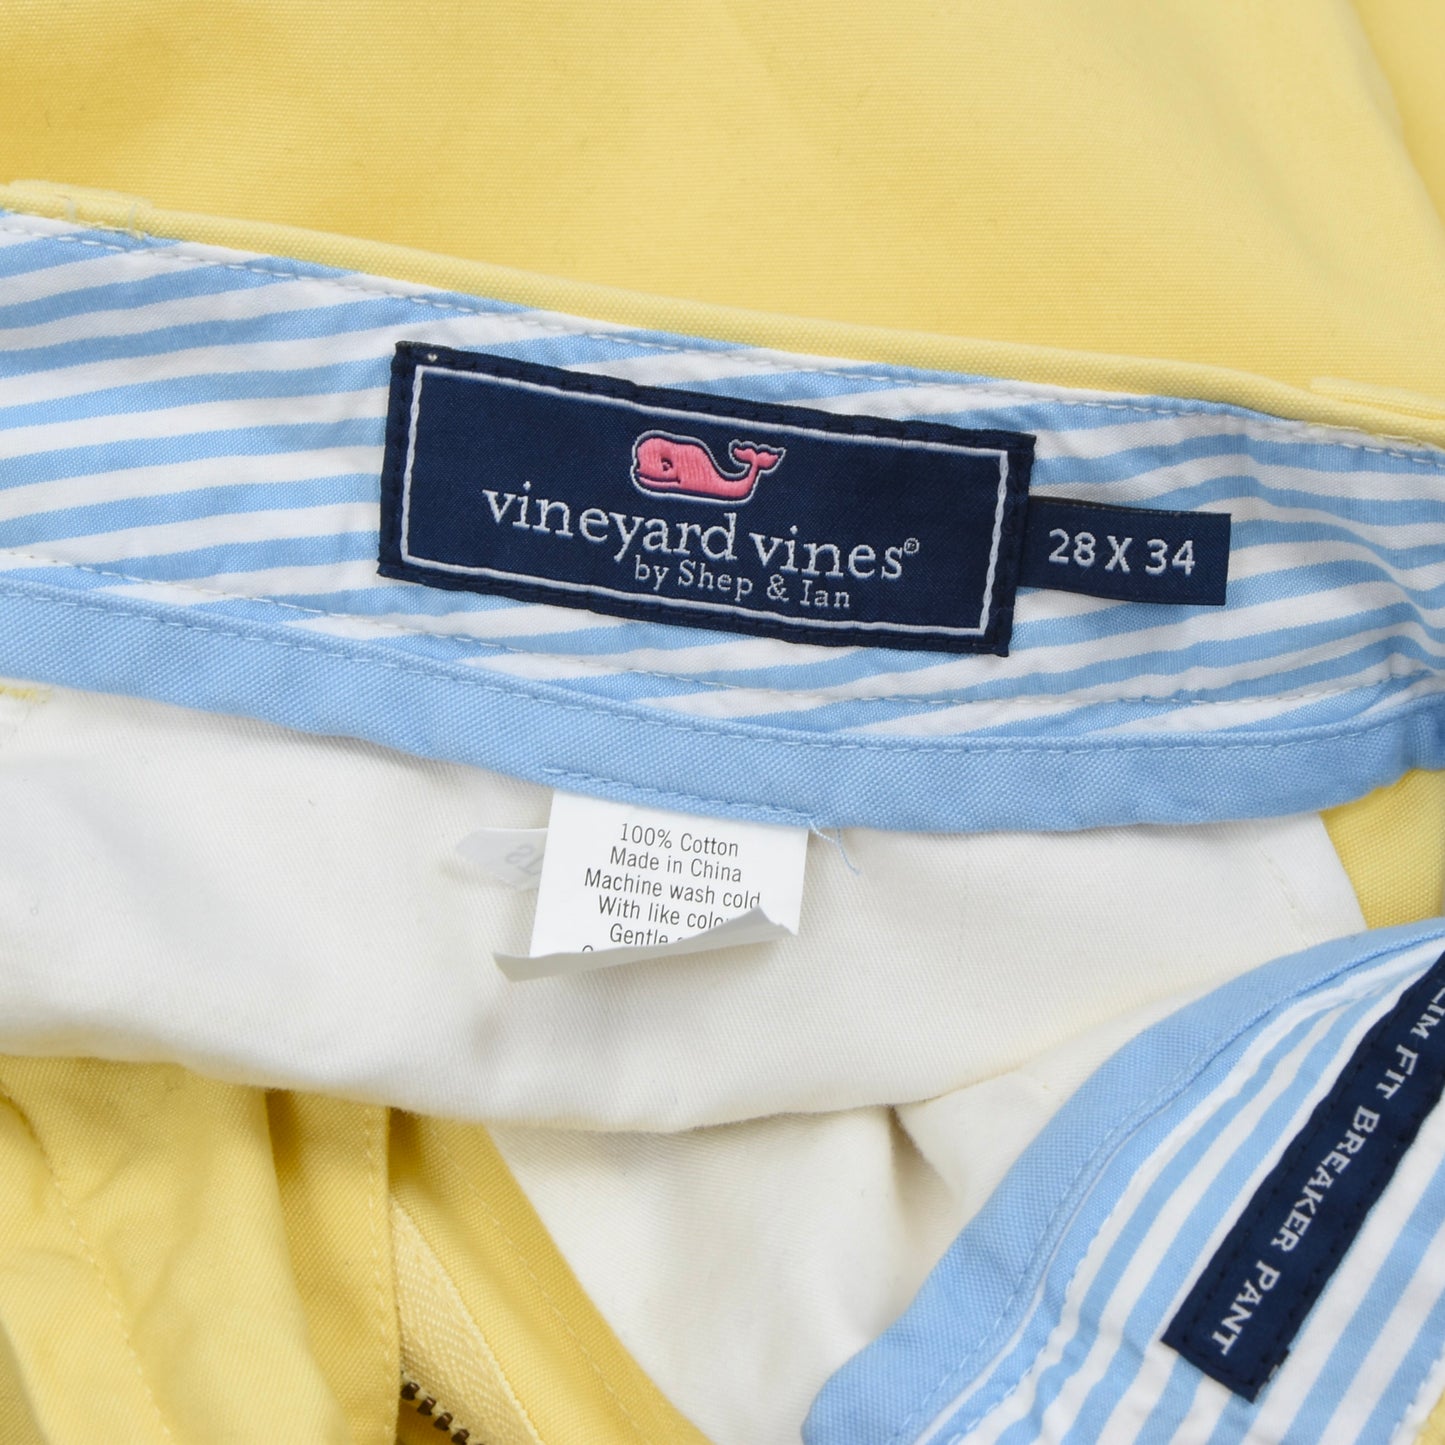 Vineyard Vines Slim Fit Breaker Pants Size W28 L34 - Canary Yellow